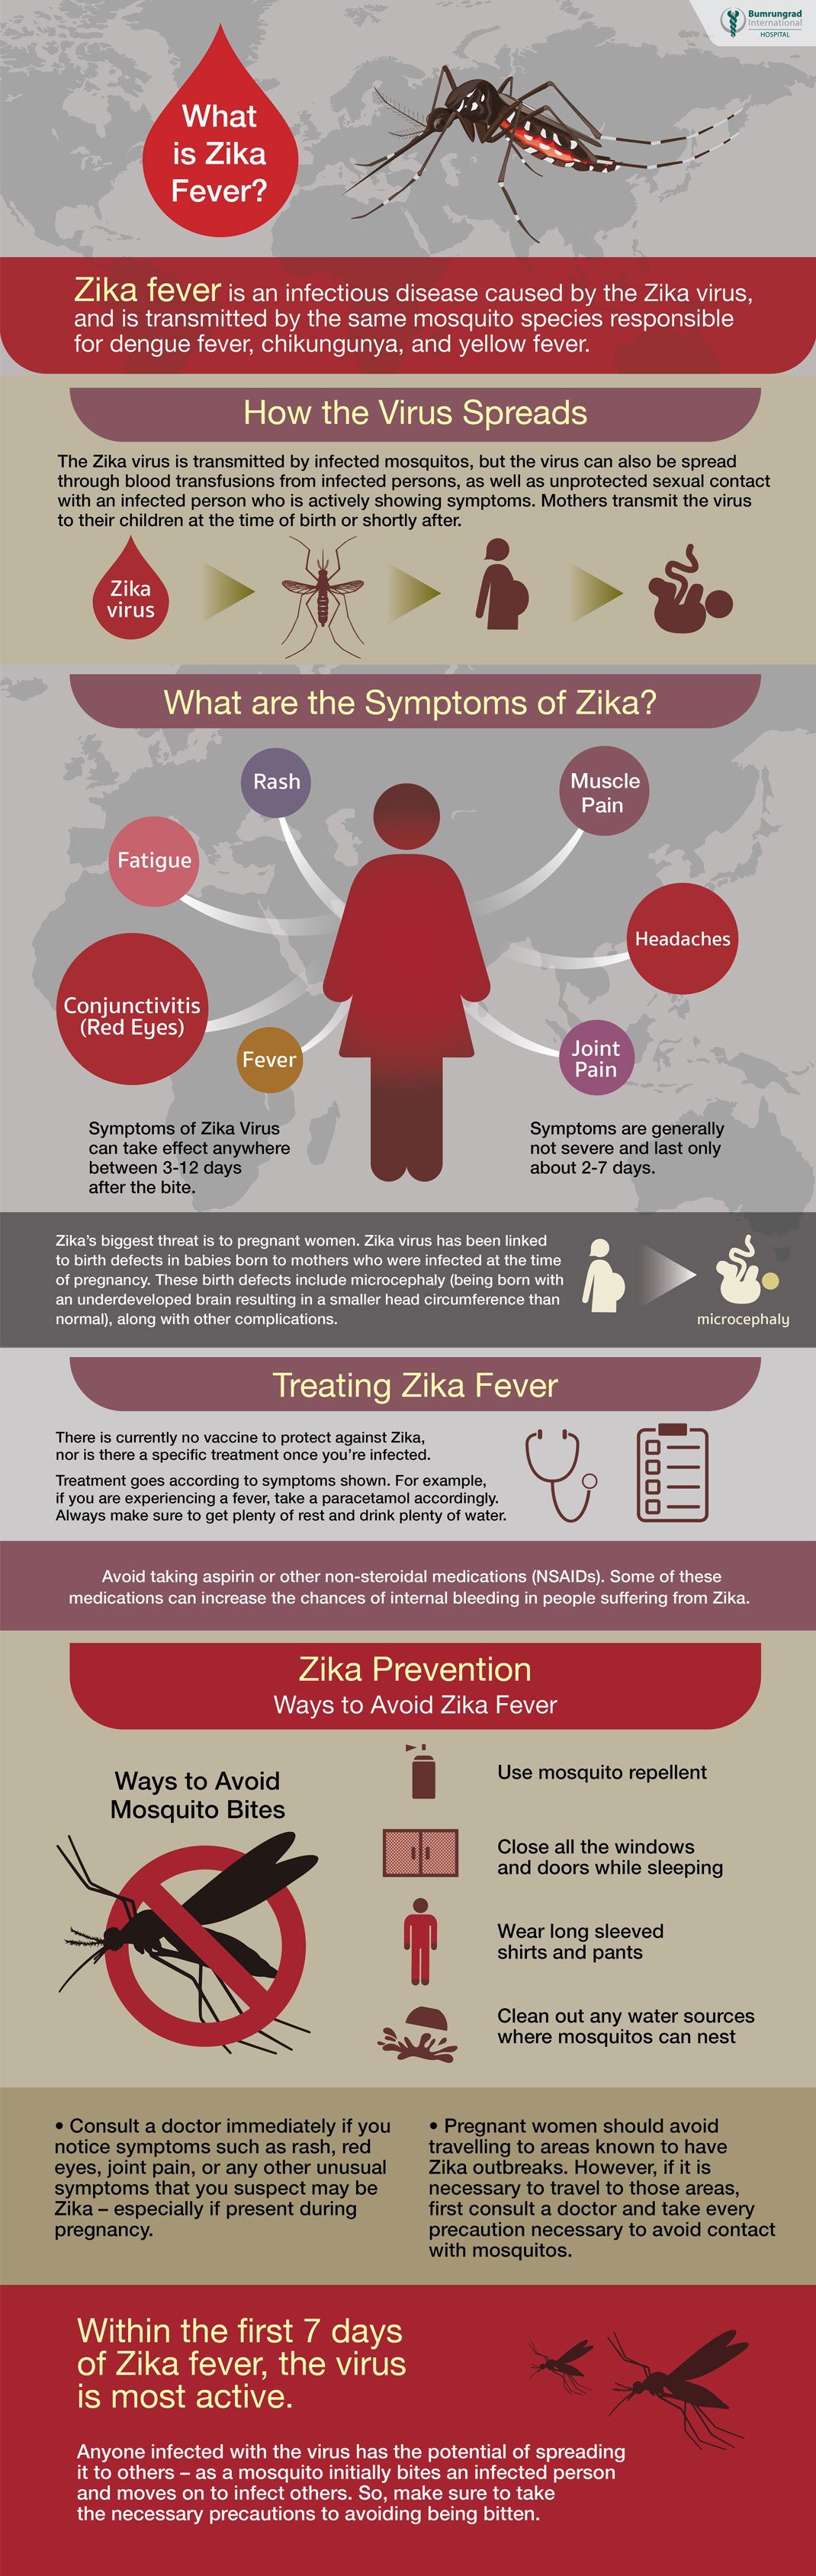 Zika-Fever-Infographic-english-web.jpg